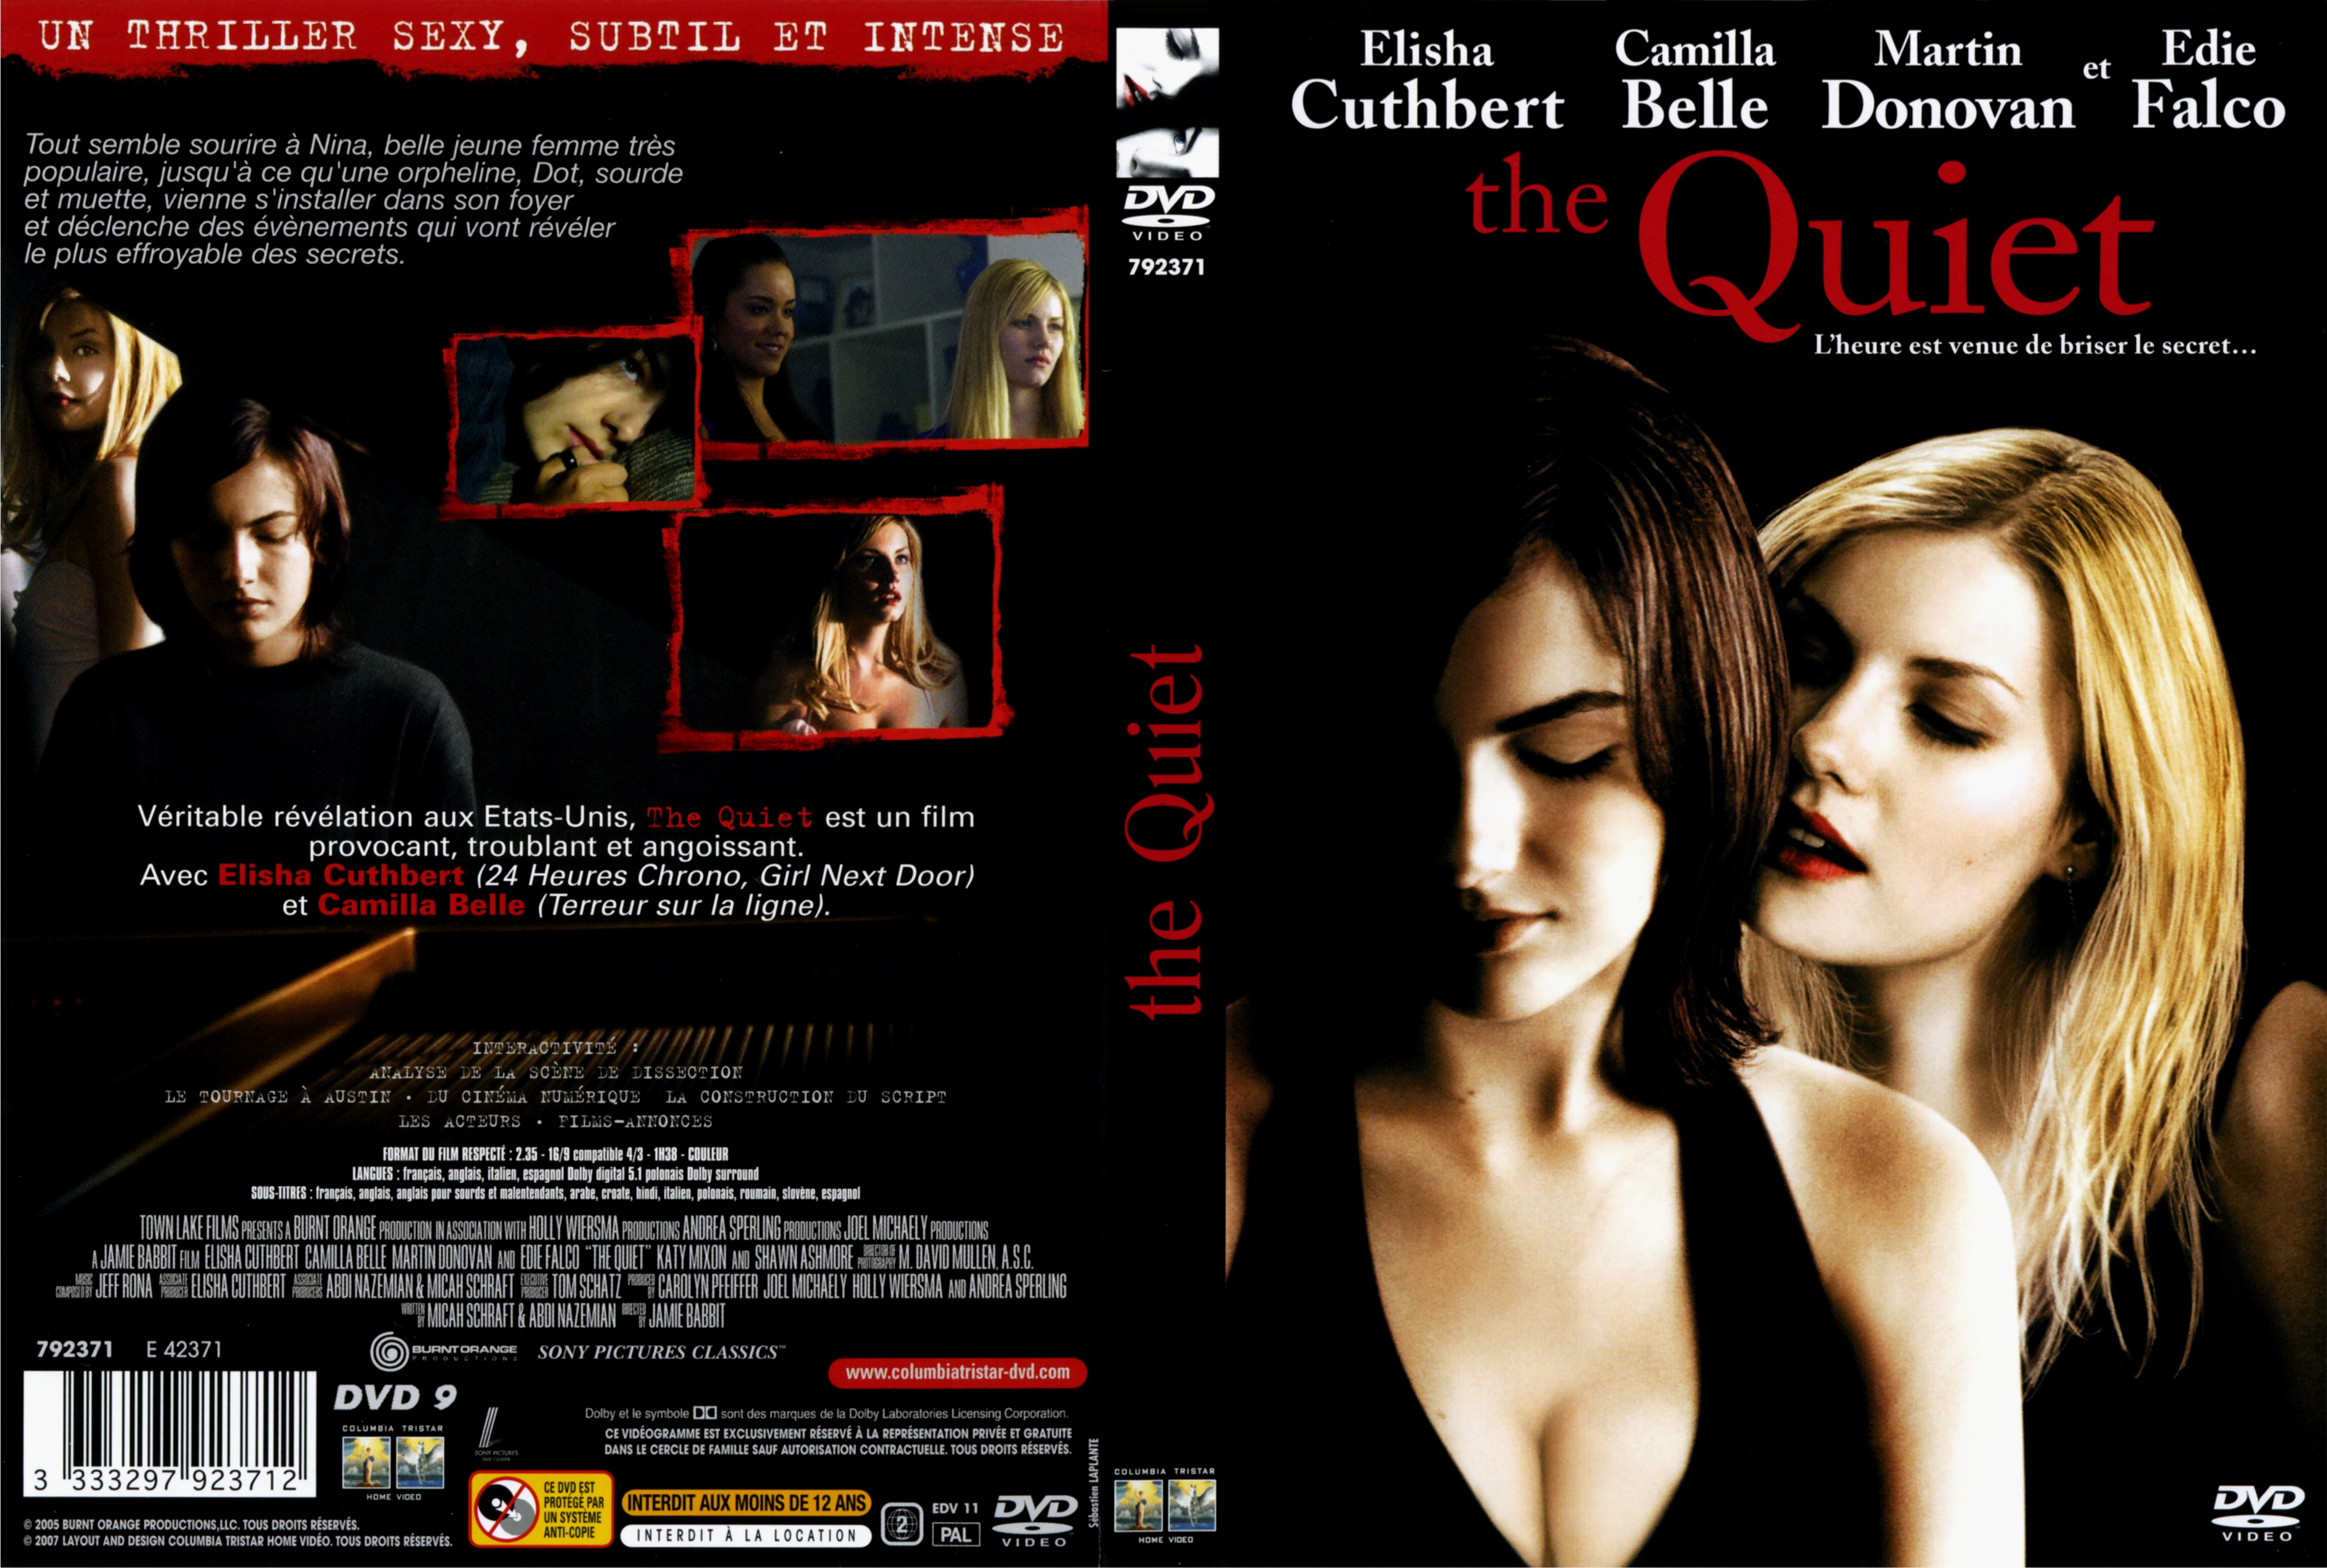 Jaquette DVD The quiet